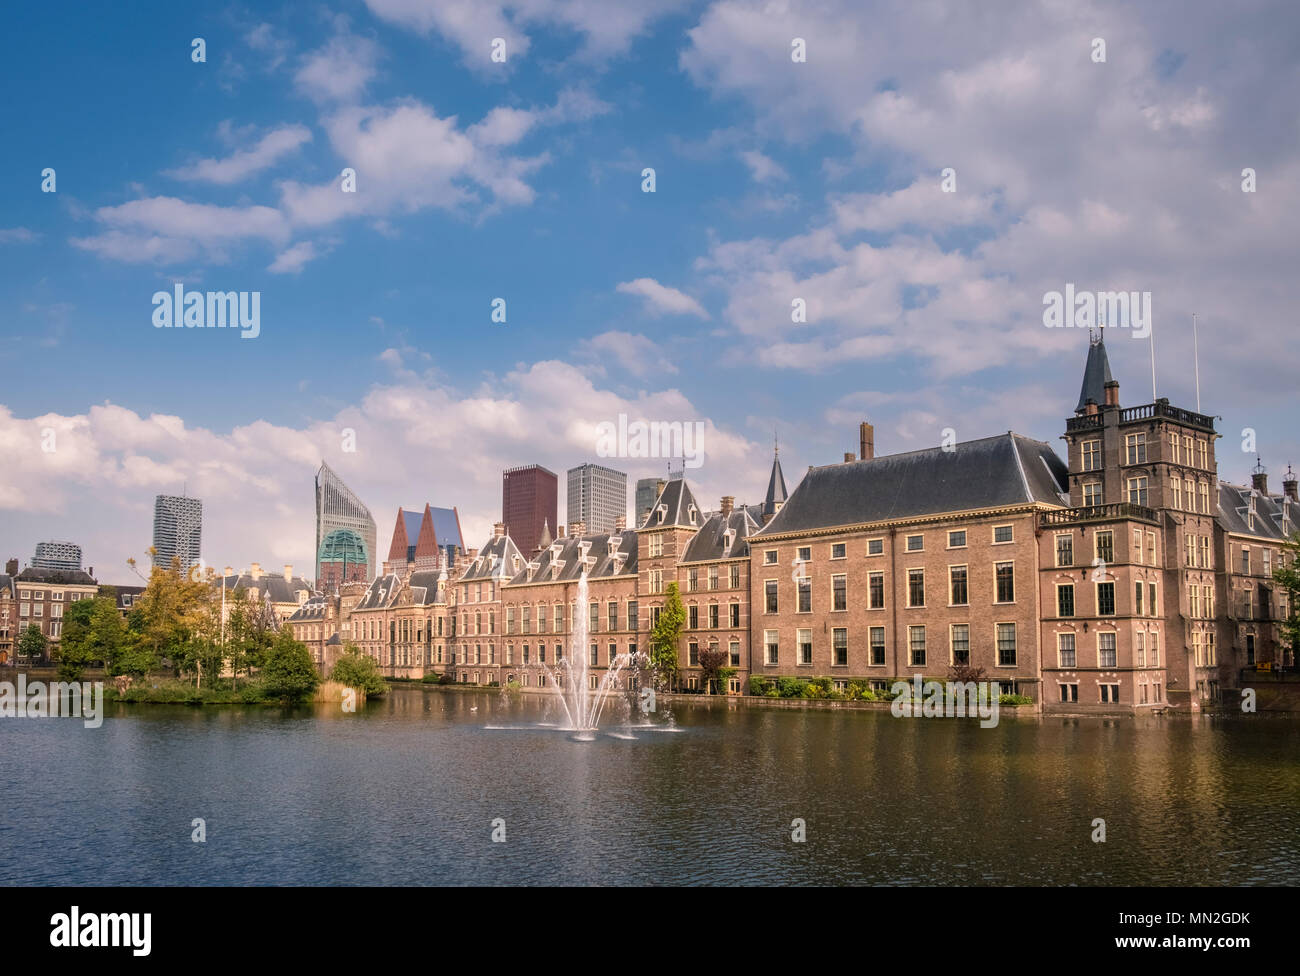 Exterior of Binnenhof parliament building and Hofvijver lake, landmark attractions in The Hague (Den Haag), Netherlands. Stock Photo